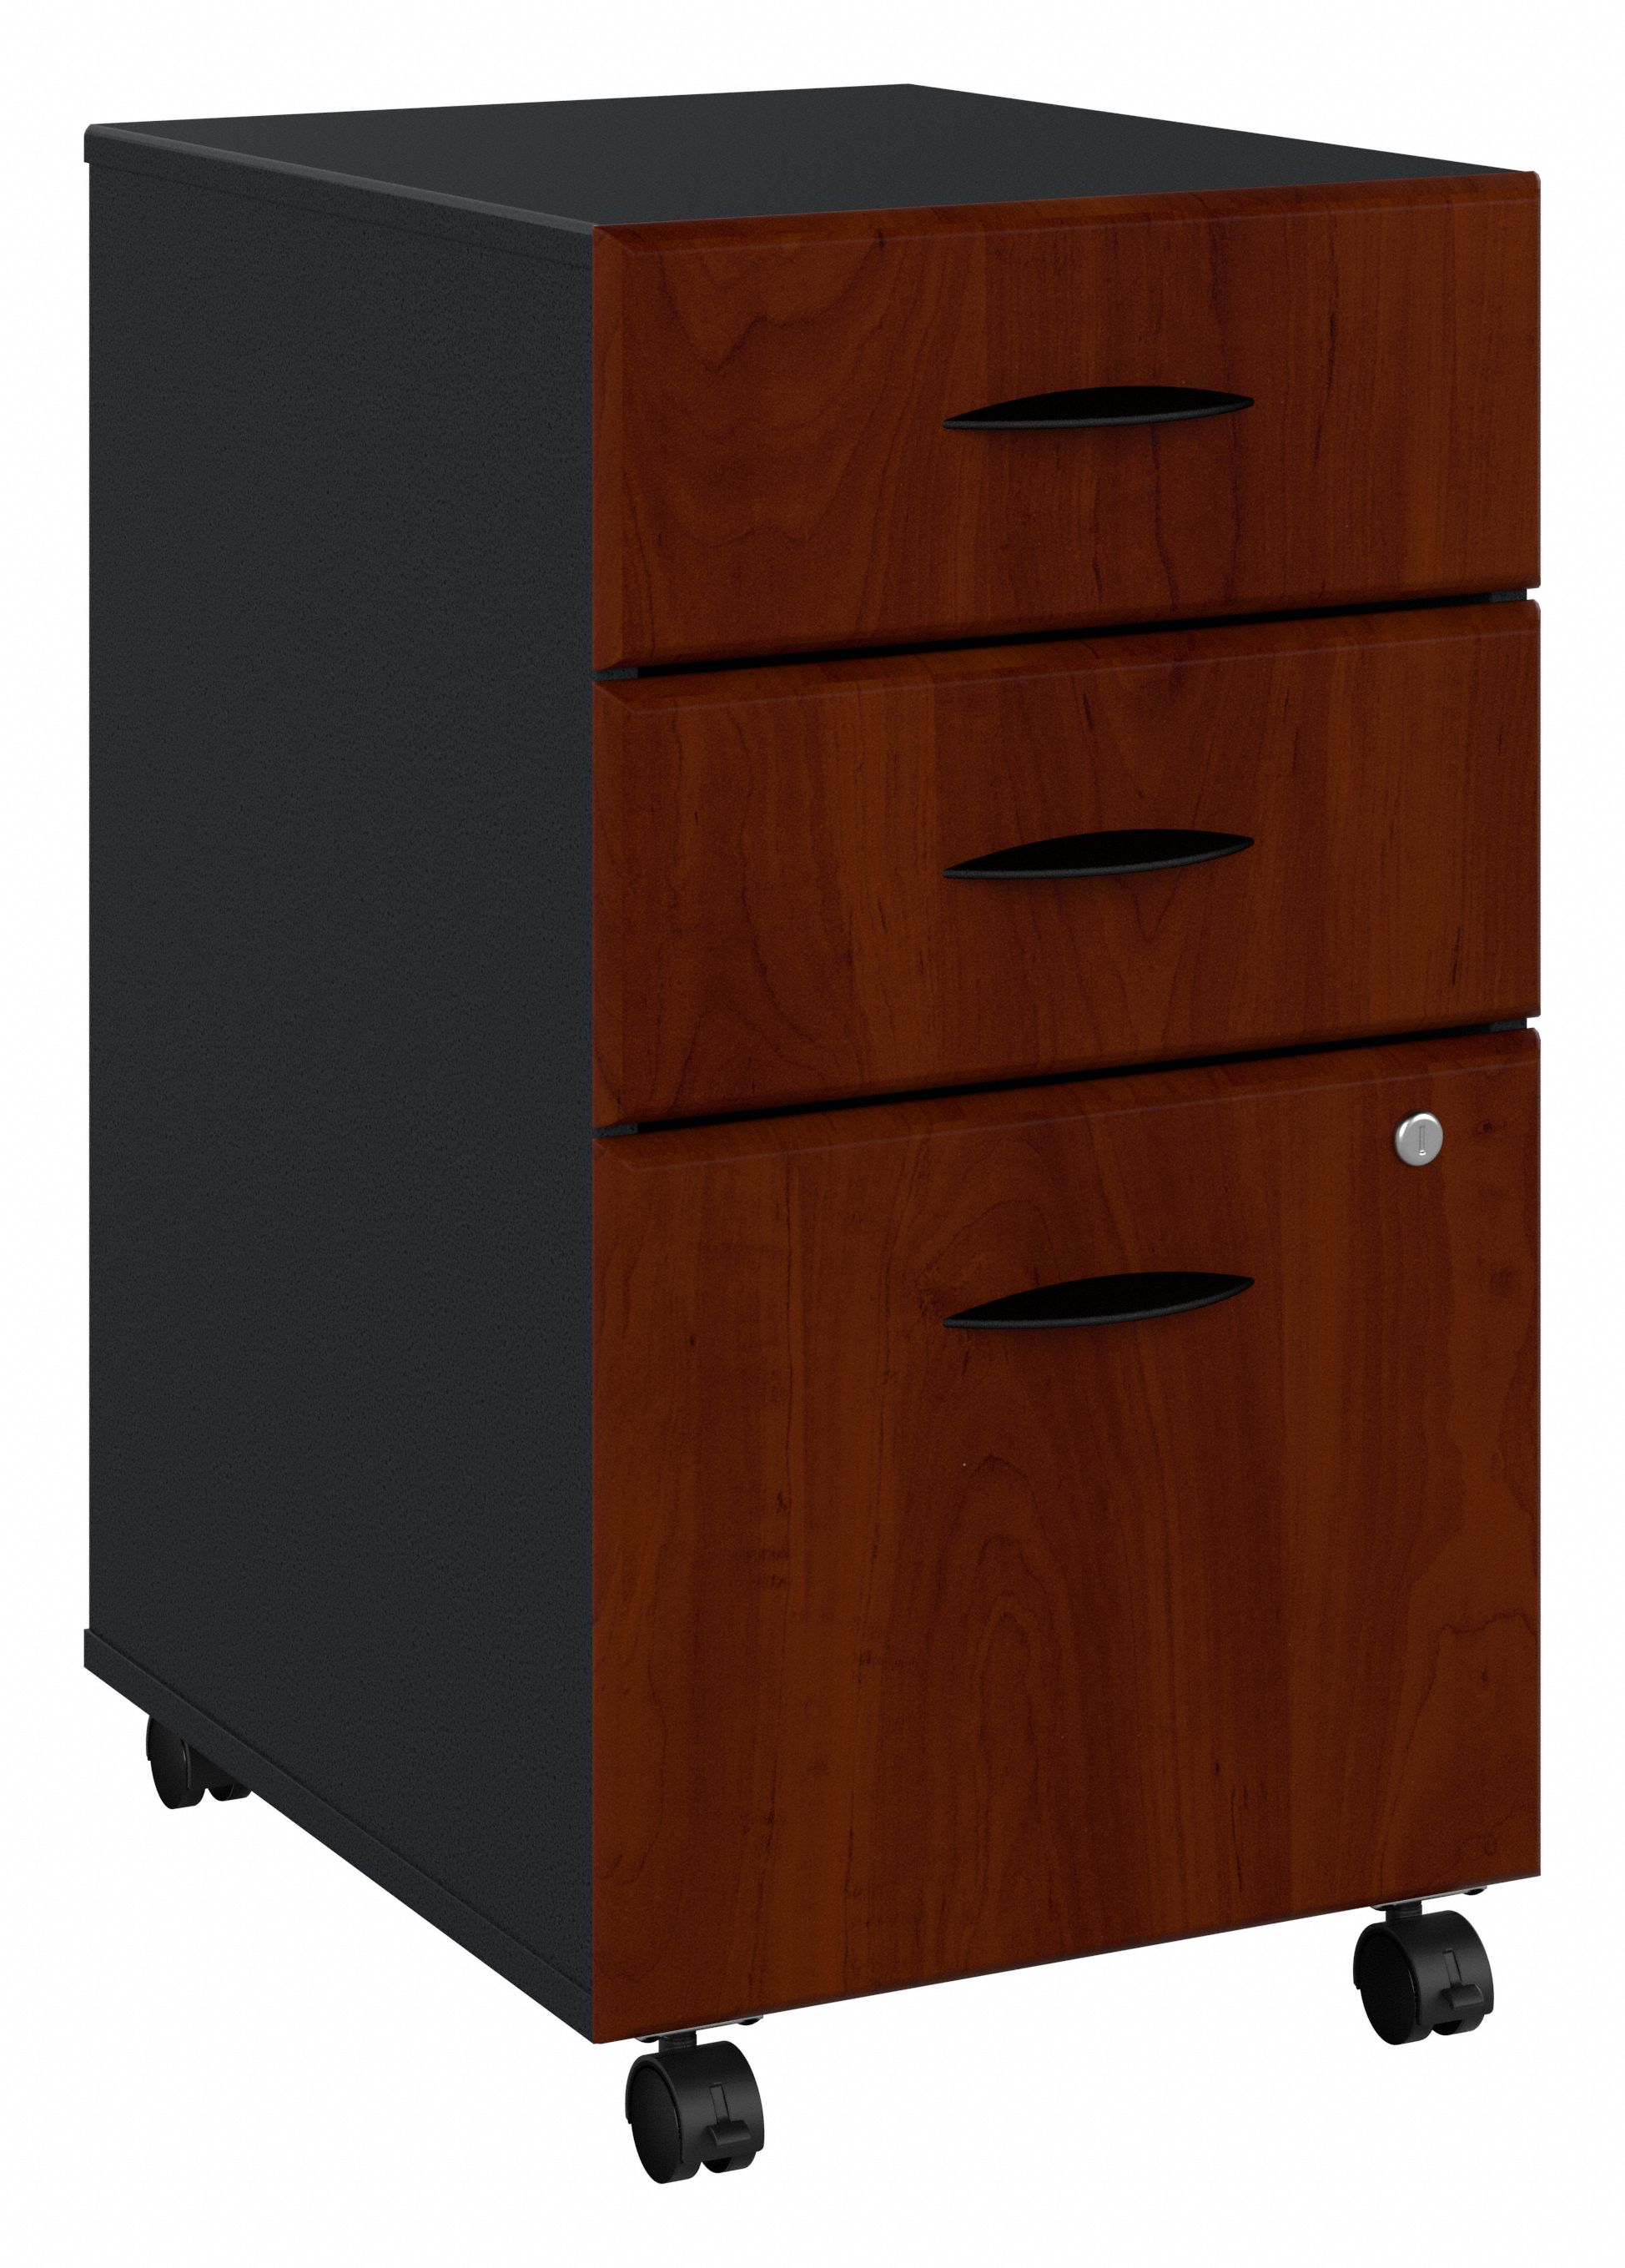 Shop Bush Business Furniture Series A 3 Drawer Mobile File Cabinet 02 WC94453PSU #color_hansen cherry/galaxy